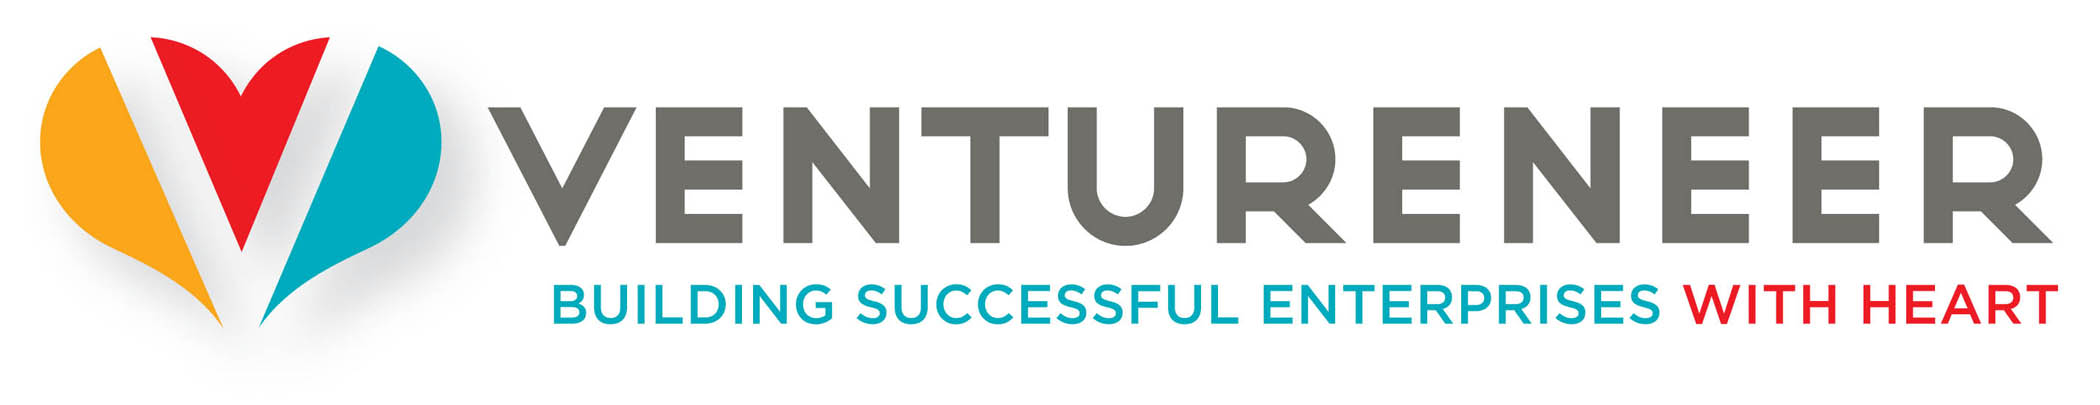 Ventureneer Offers Nonprofit Leaders Tips on Investment, Asset Management Image